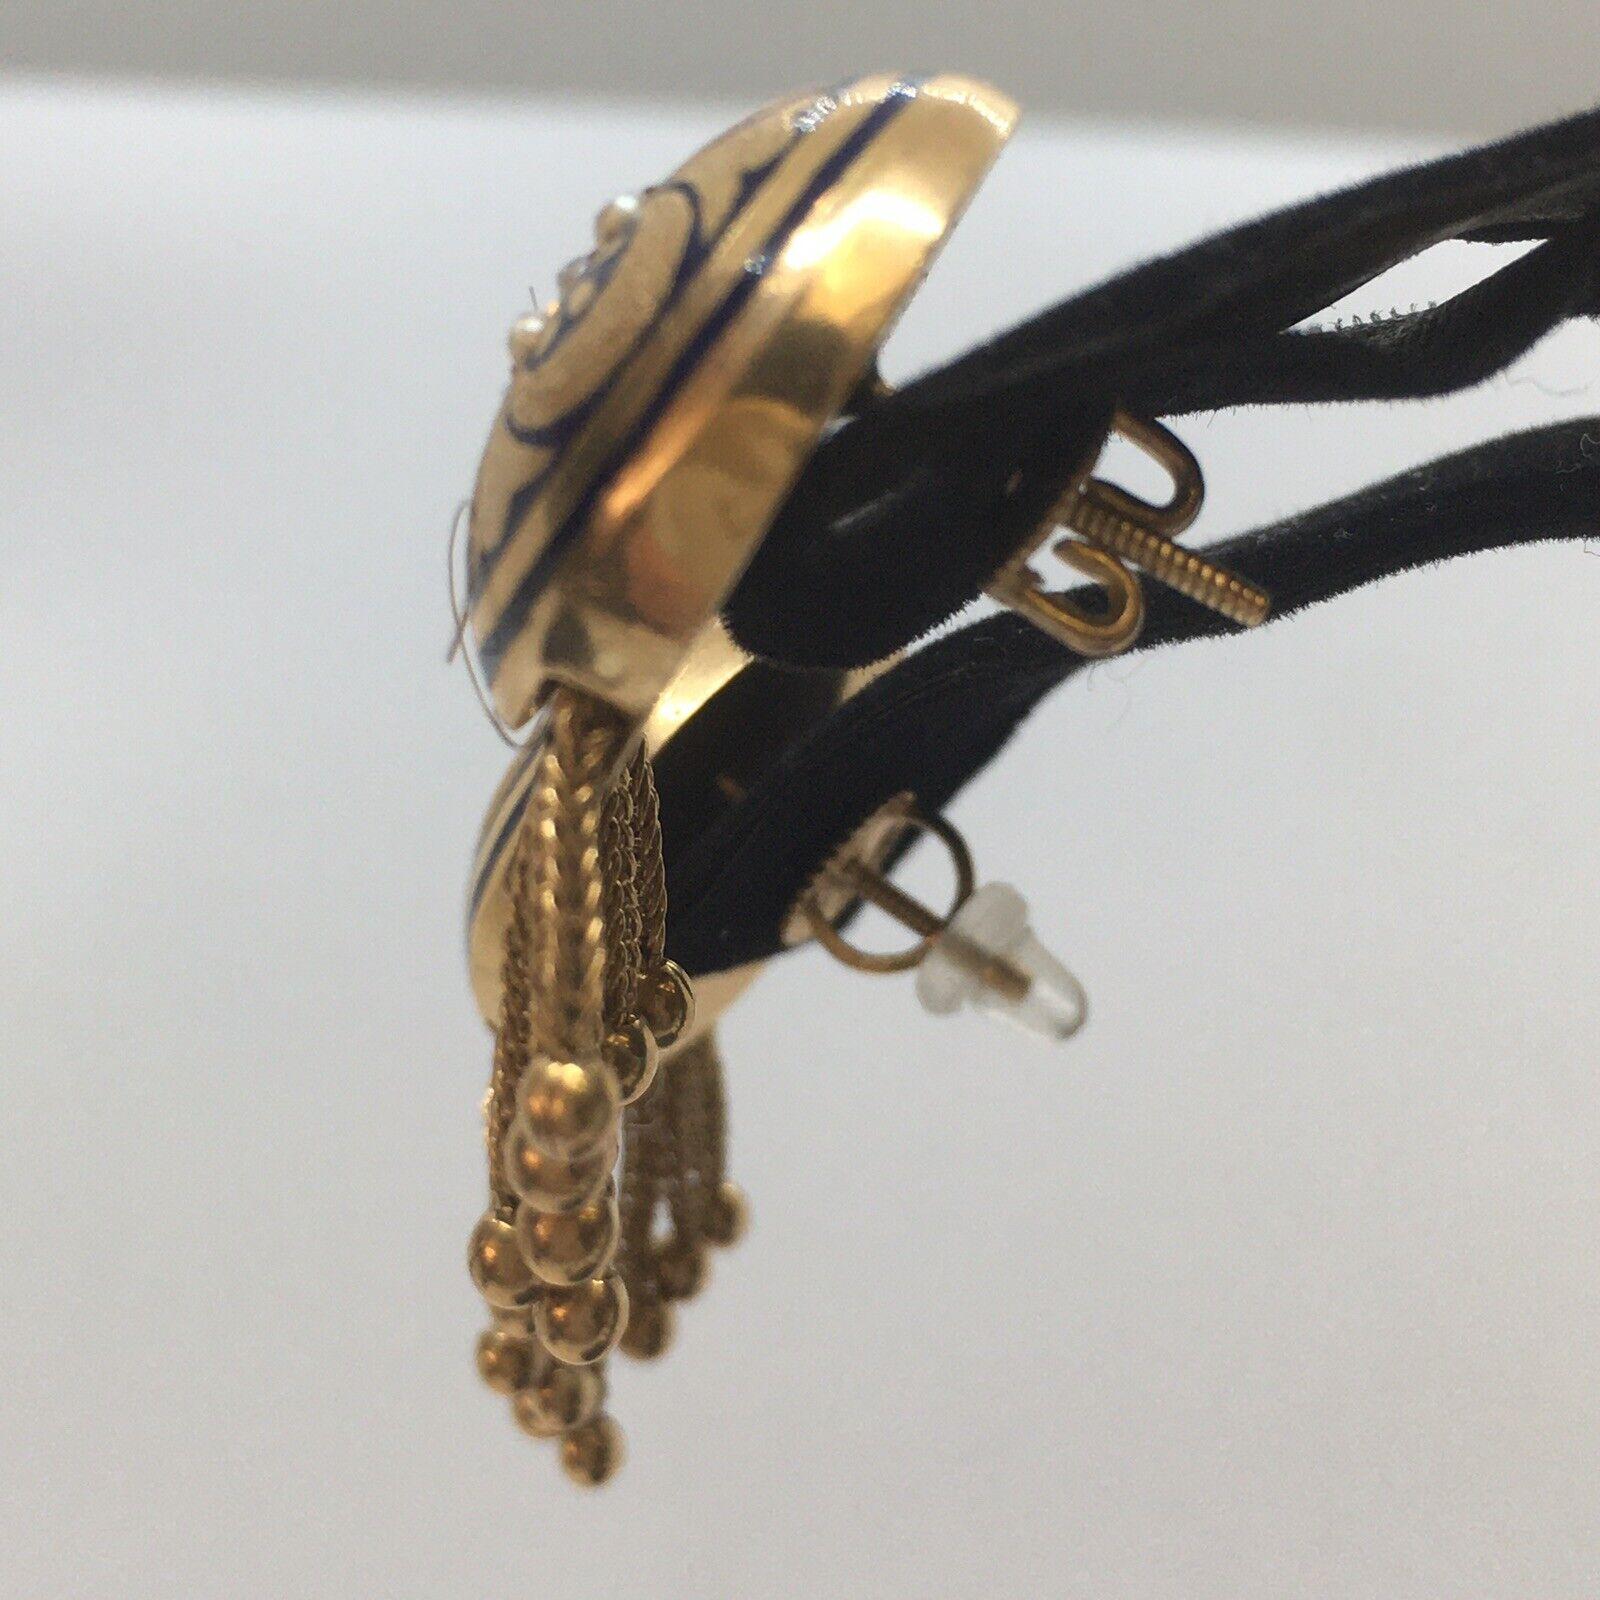 Art Nouveau1900s American Seed Pearl Tassel Drop Stud Enamel Earrings

Hallmark, 14K
Weighing 12.7 gram
29 mm circular top
Hanging 1 inch
Screw back, could be modified upon request